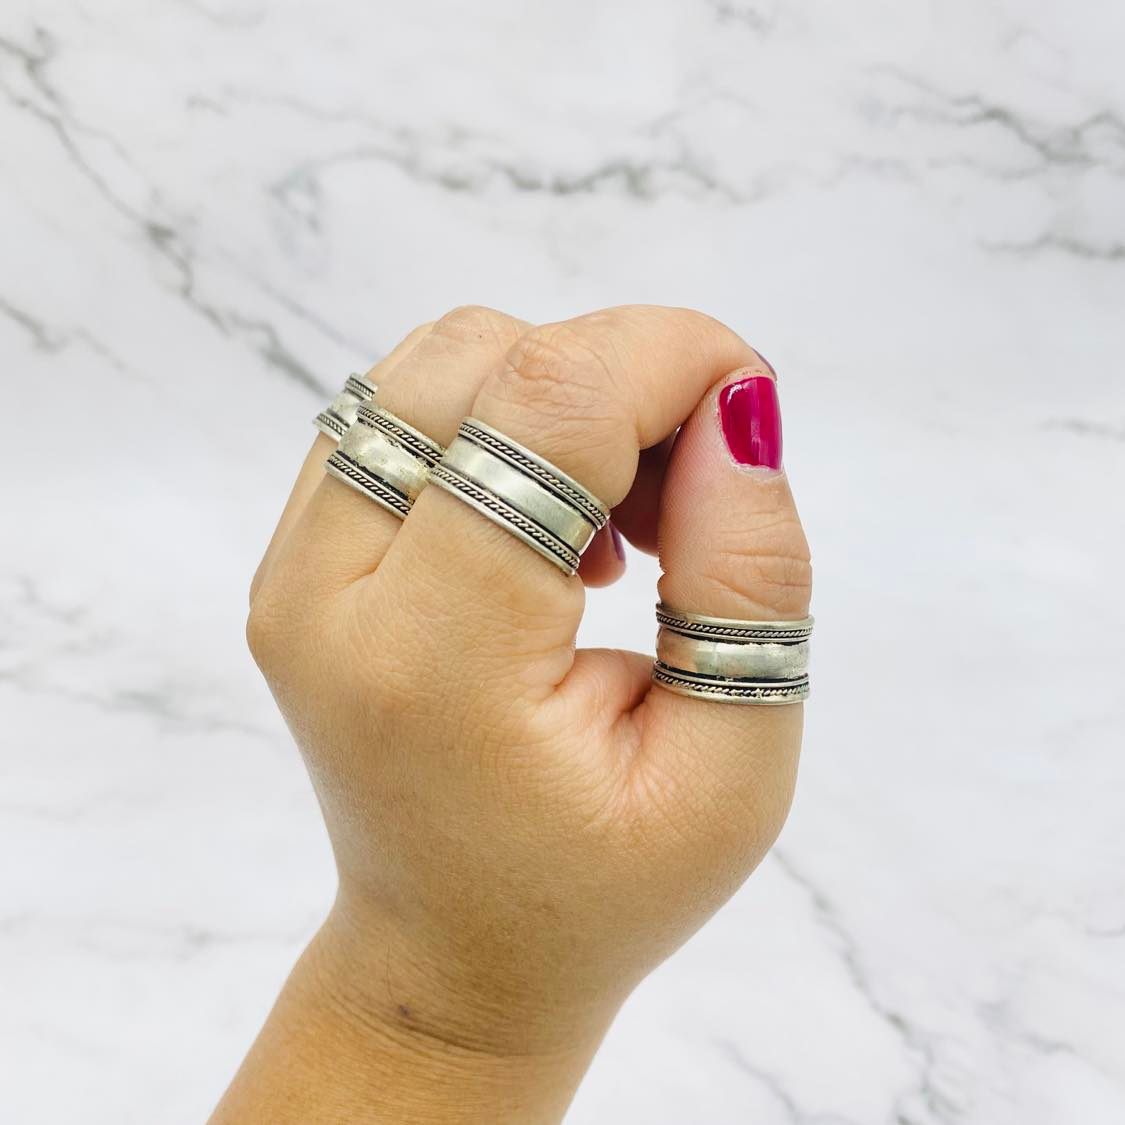 Plain Silver Ring, Bohemian Jewelry, Adjustable Ring, Handmade Jewelry, Unisex Ring